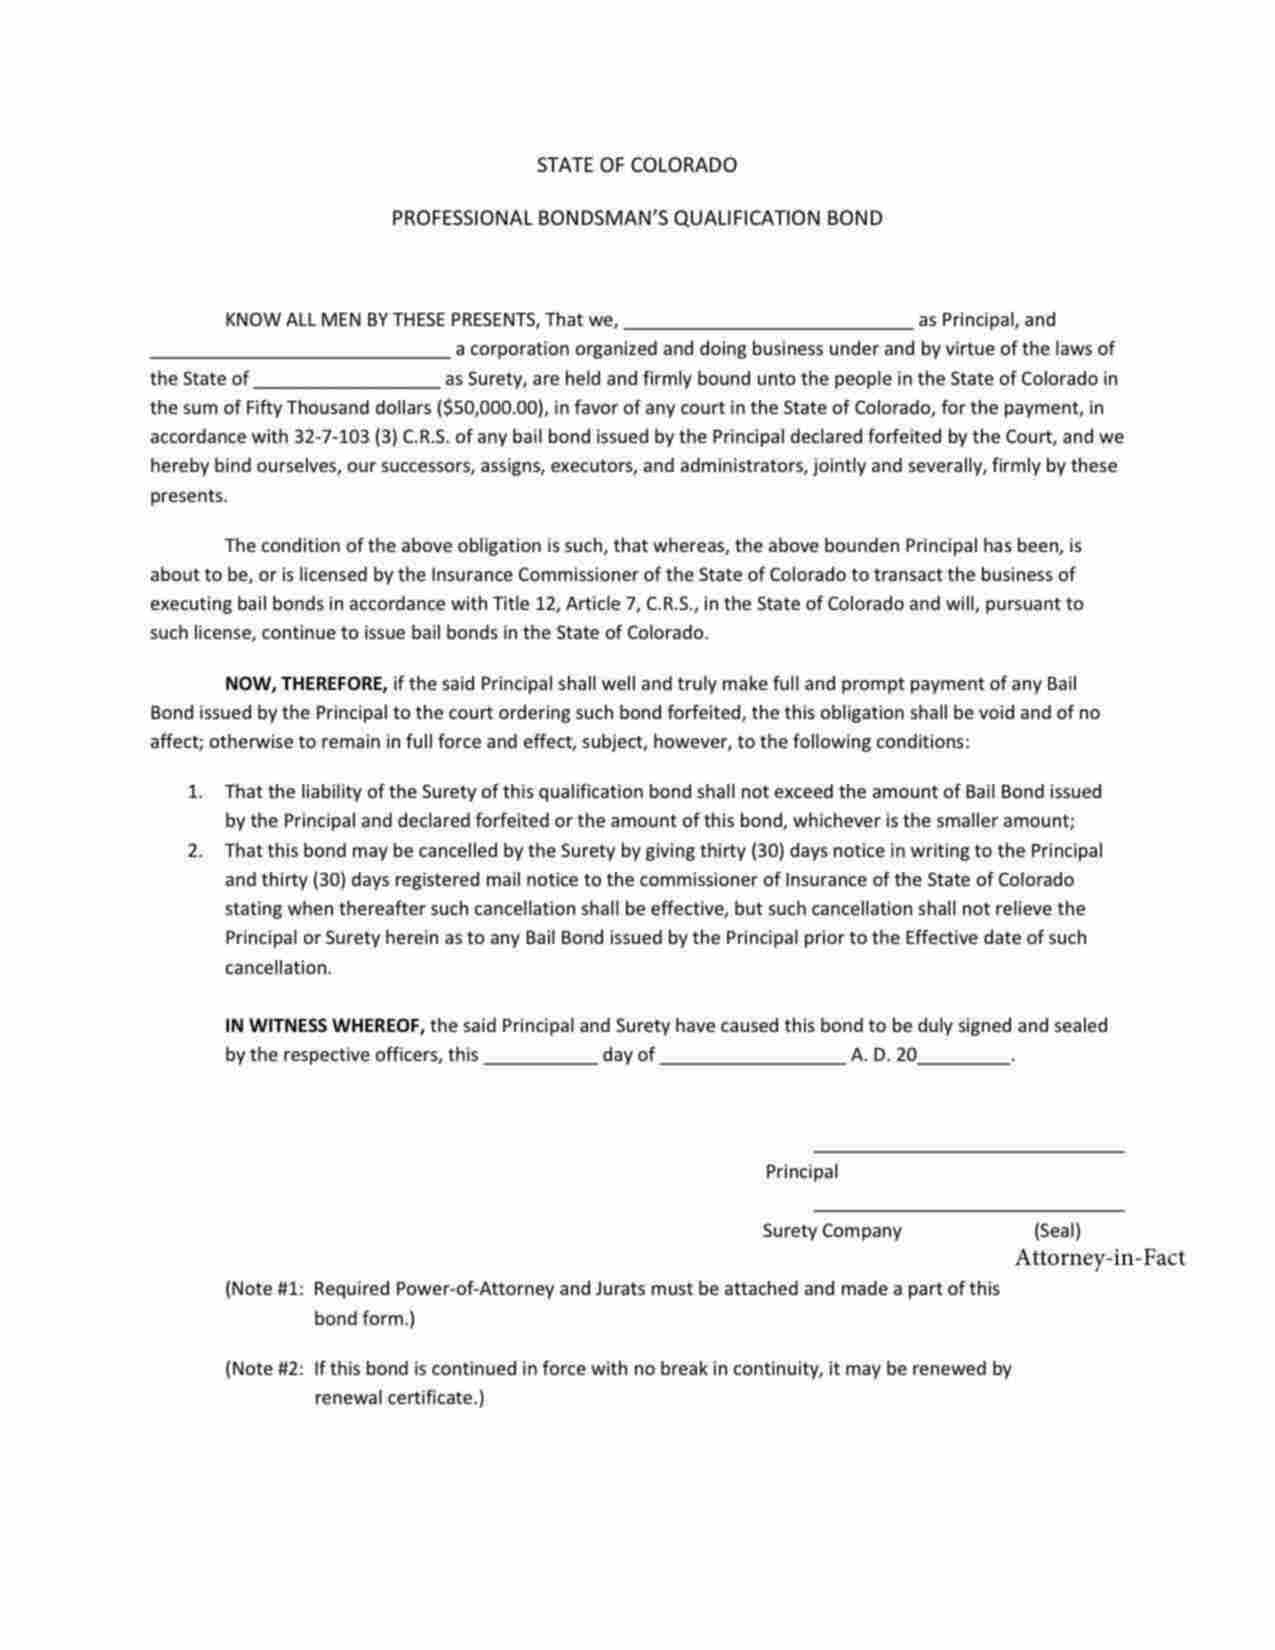 Colorado Professional Bondsman Qualification Bond Form